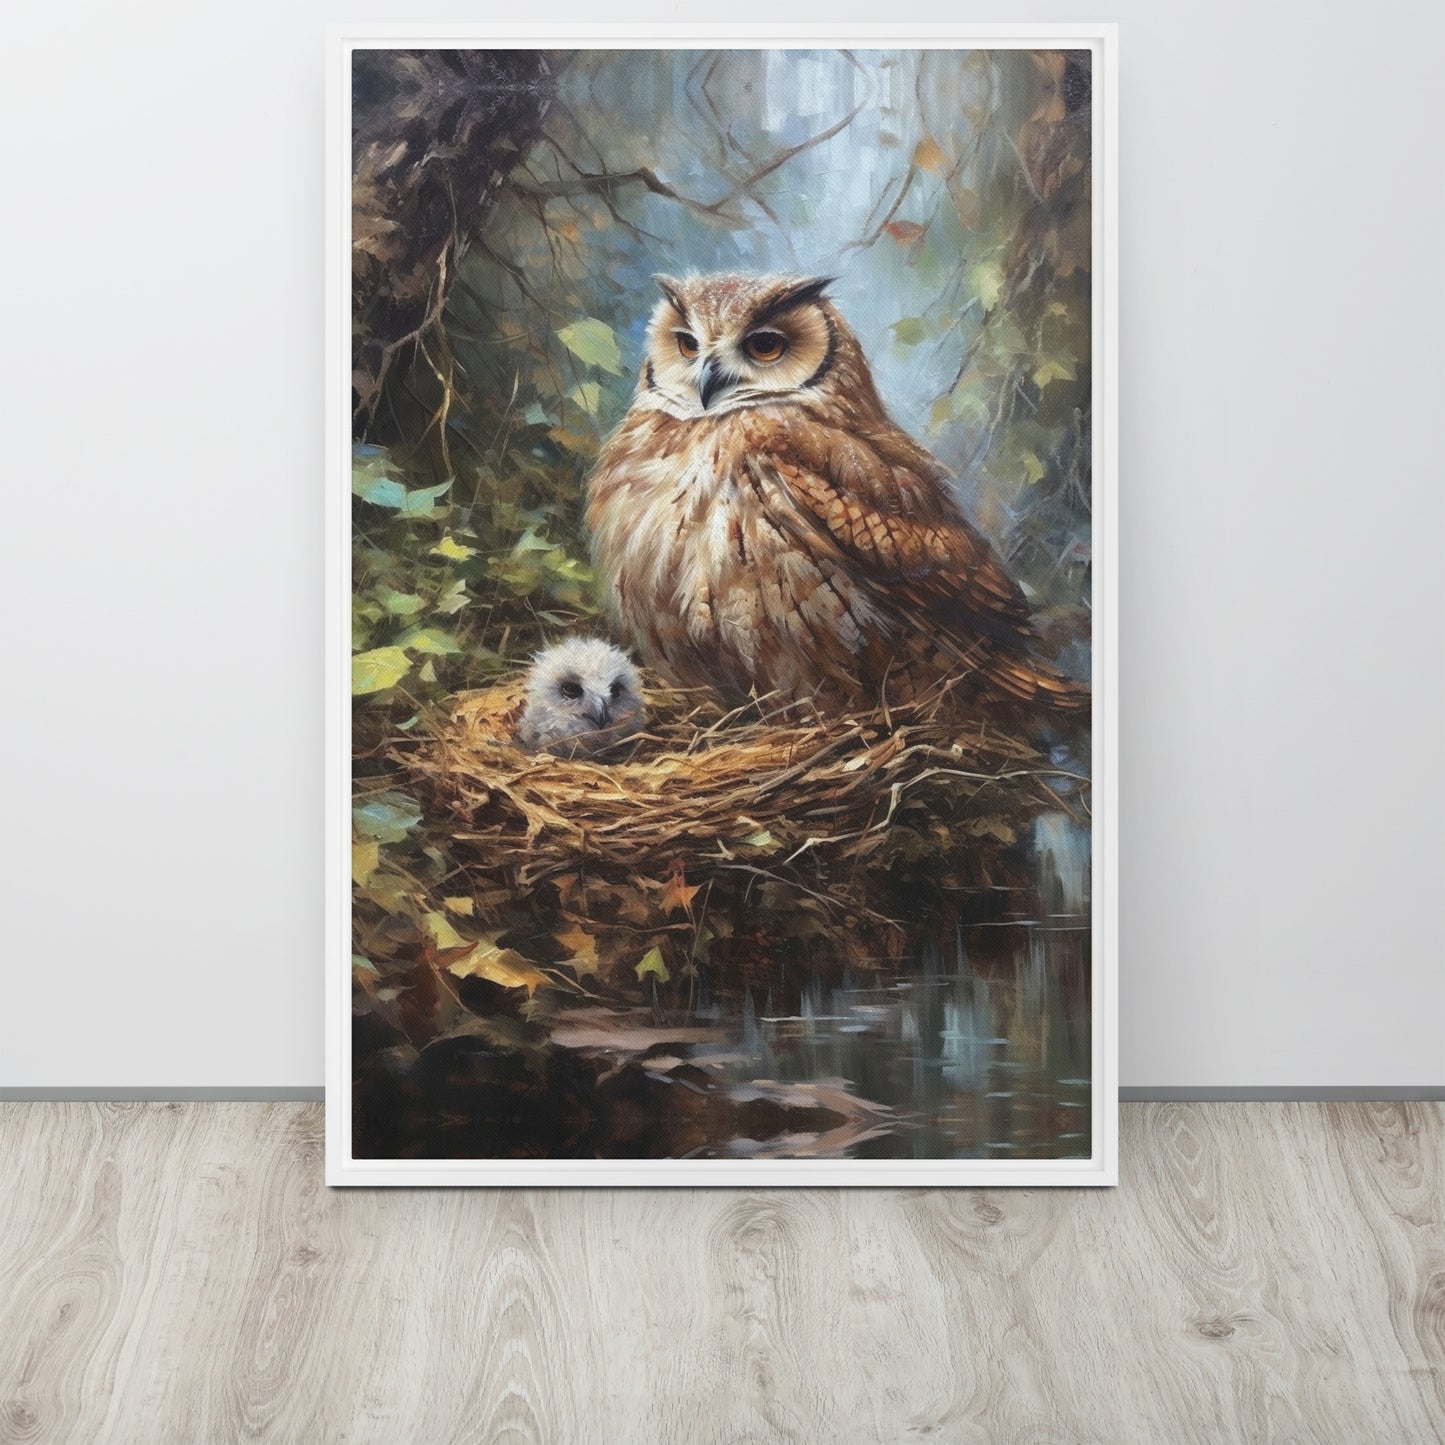 Owl's nest